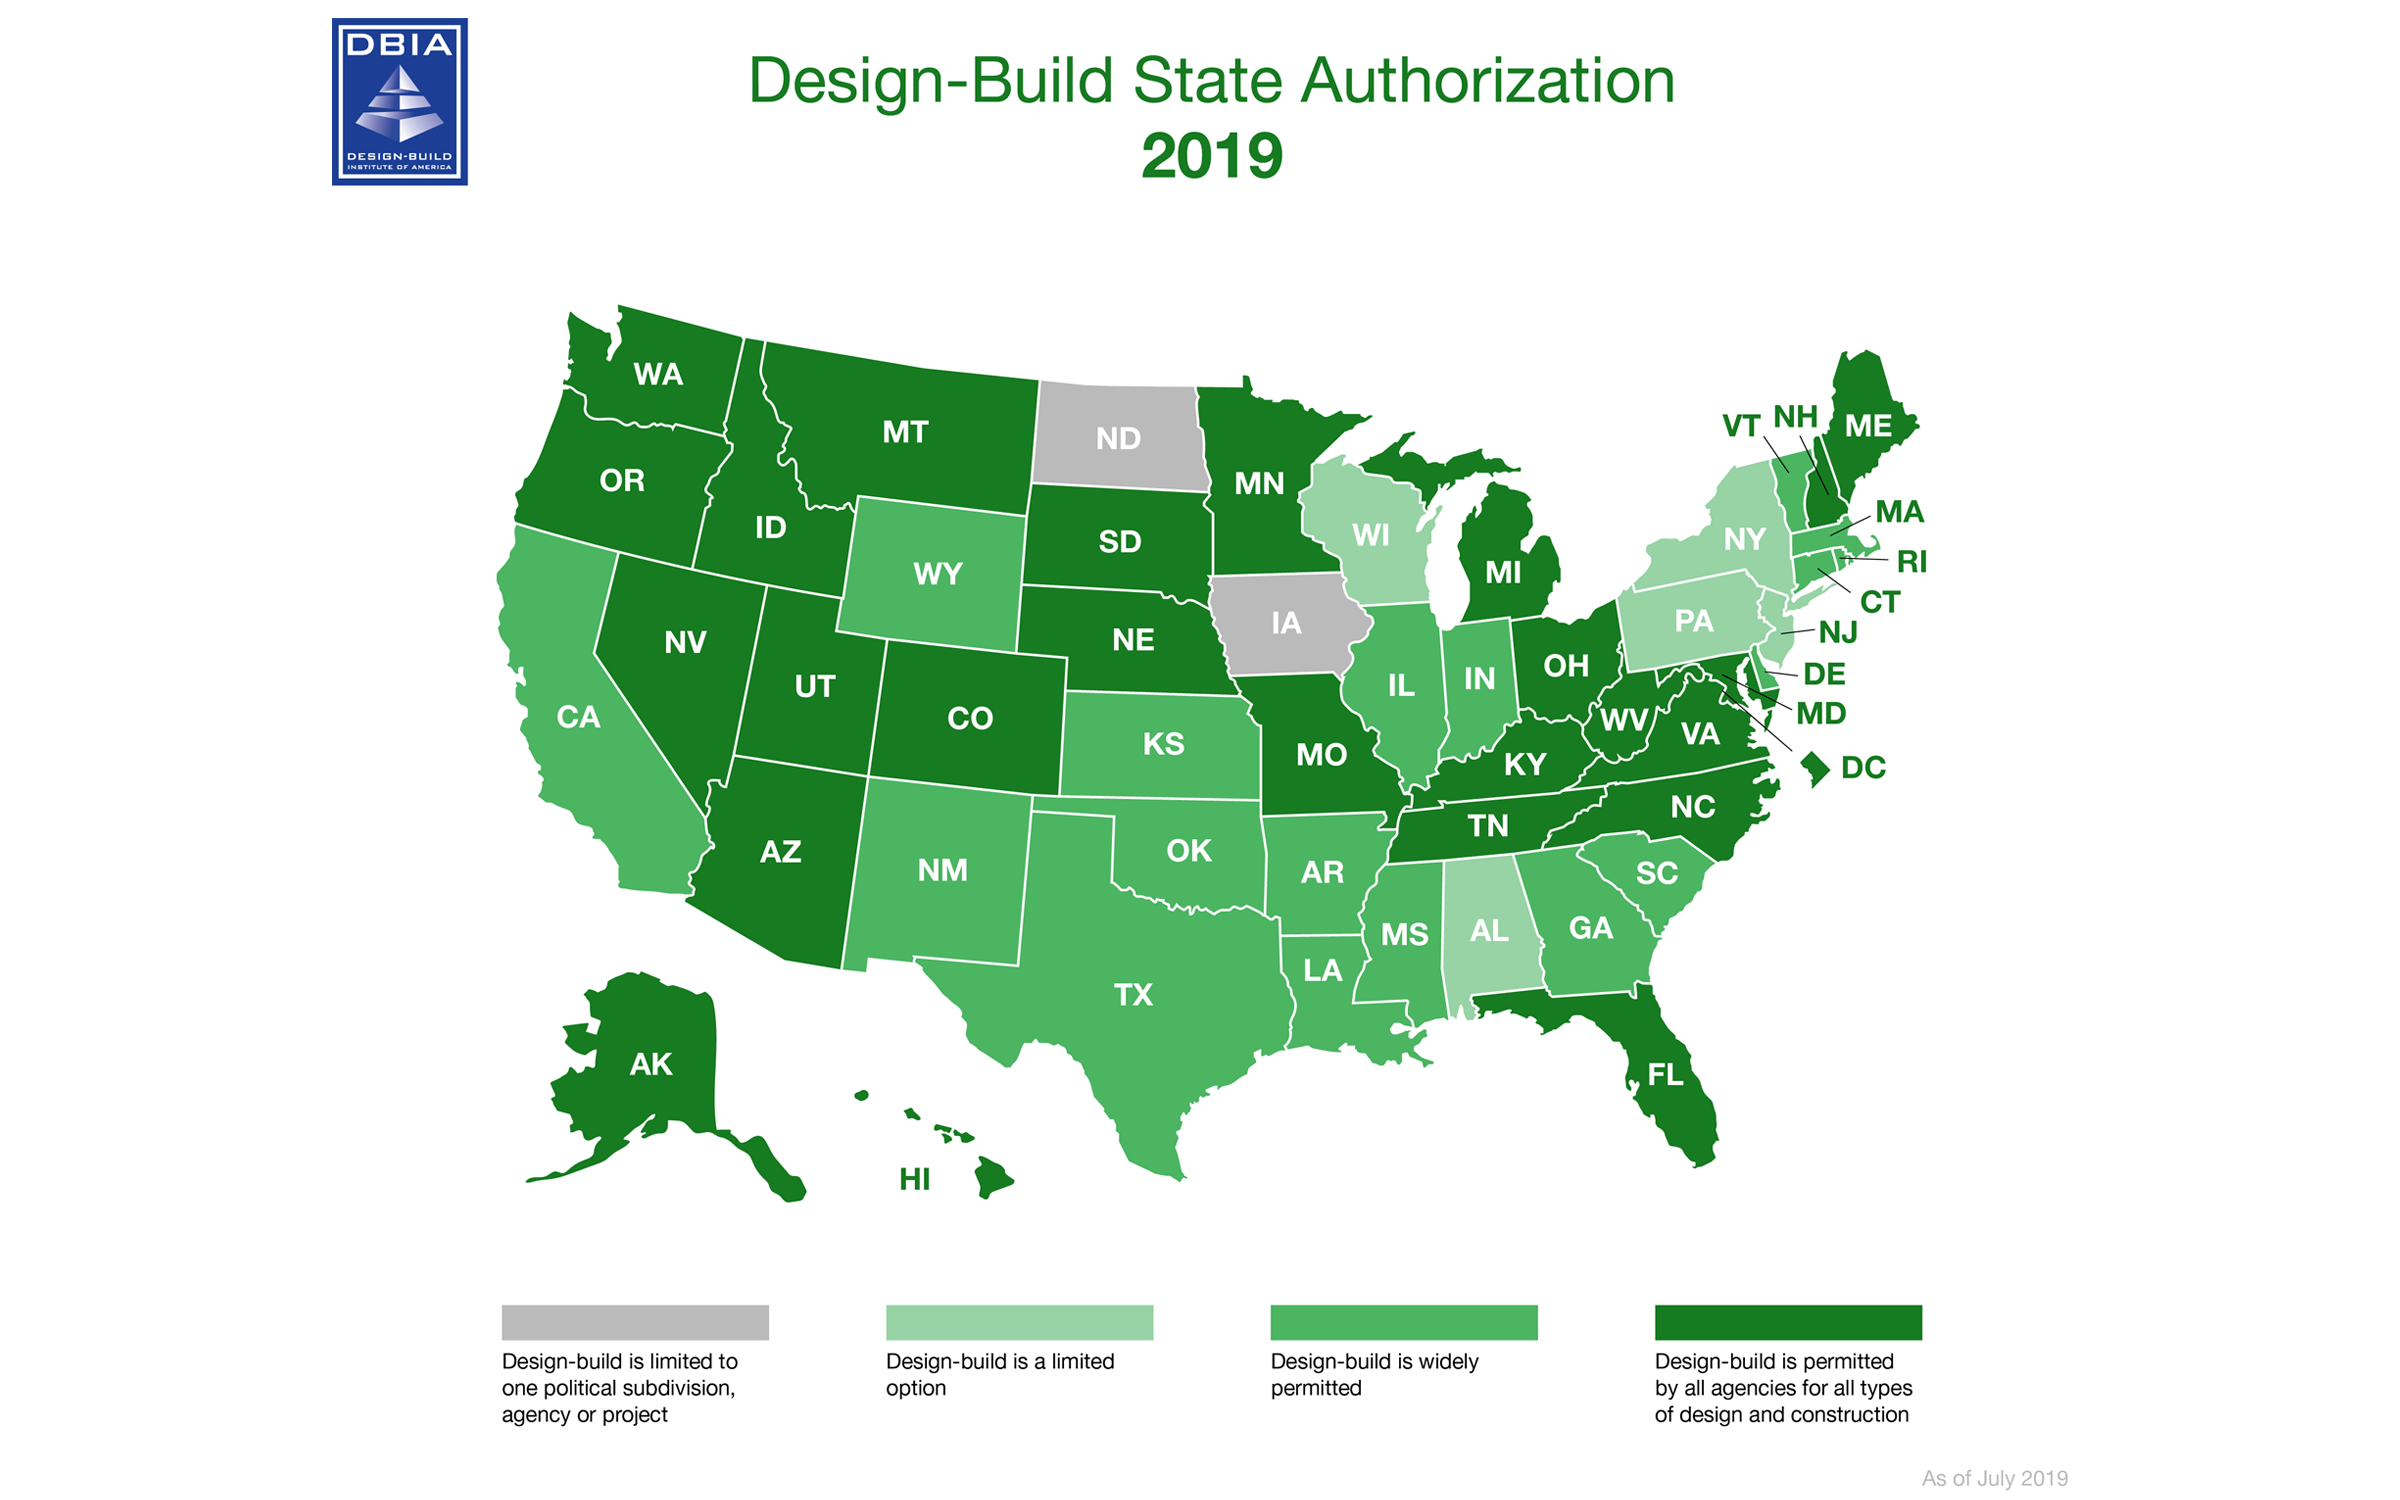 Design-Build State Authorization Map 2019